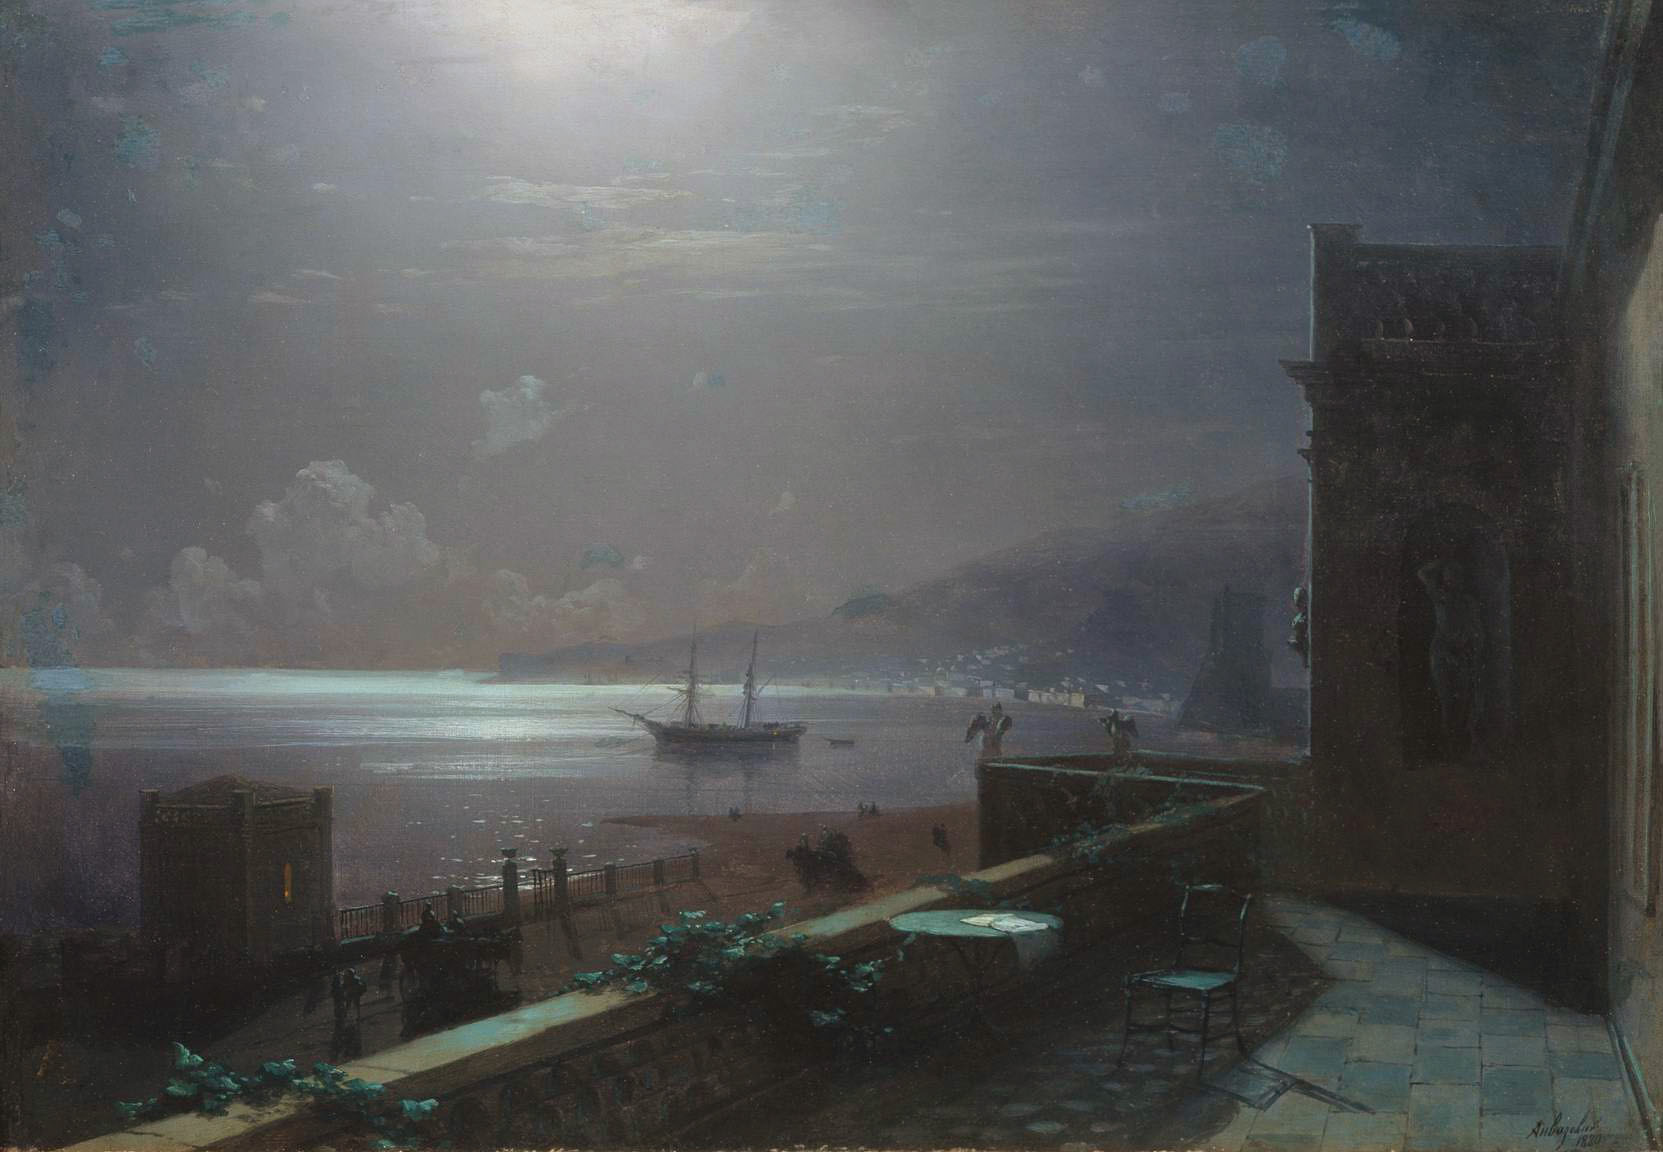 Айвазовский. Феодосия в лунную ночь. Вид с балкона дома Айвазовского на море и город. 1880